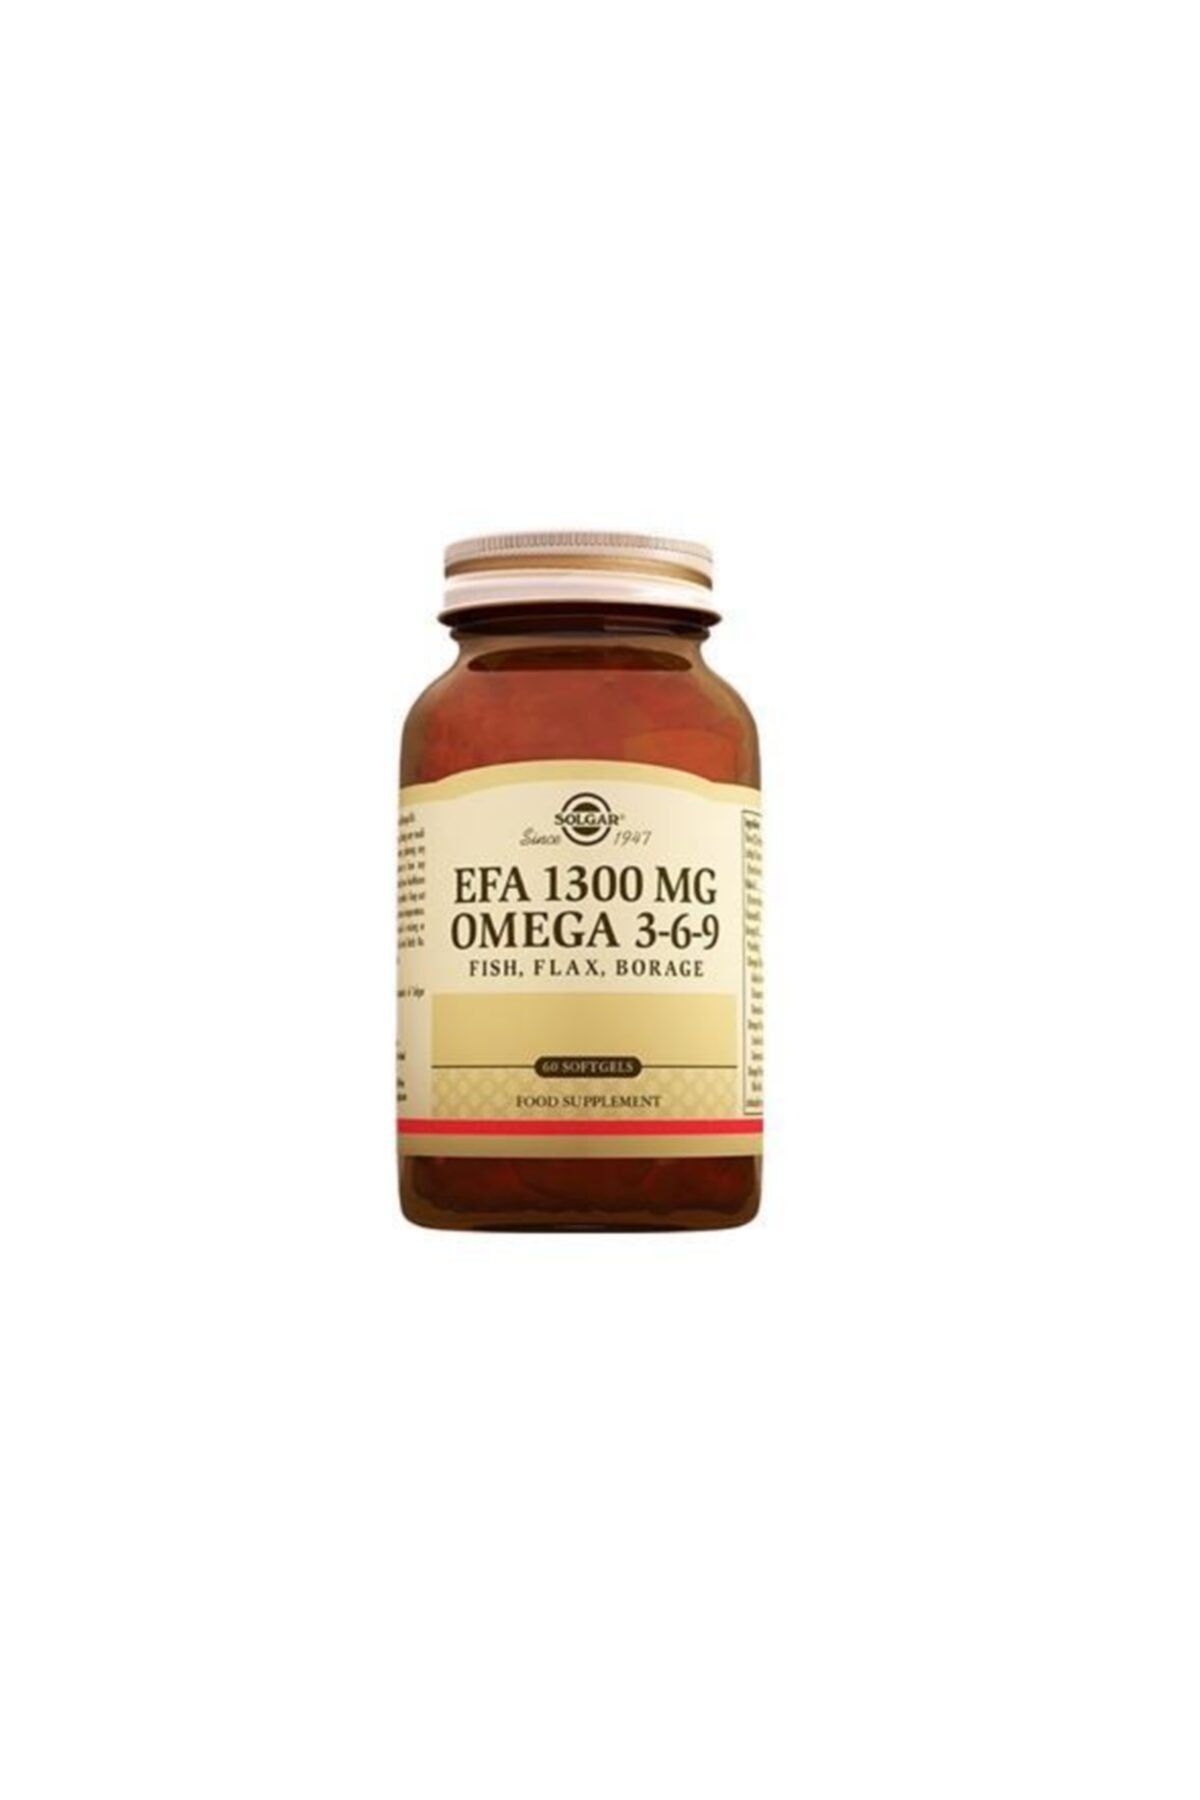 Solgar Omega 3-6-9 Efa 1300 Mg 60 Softjel